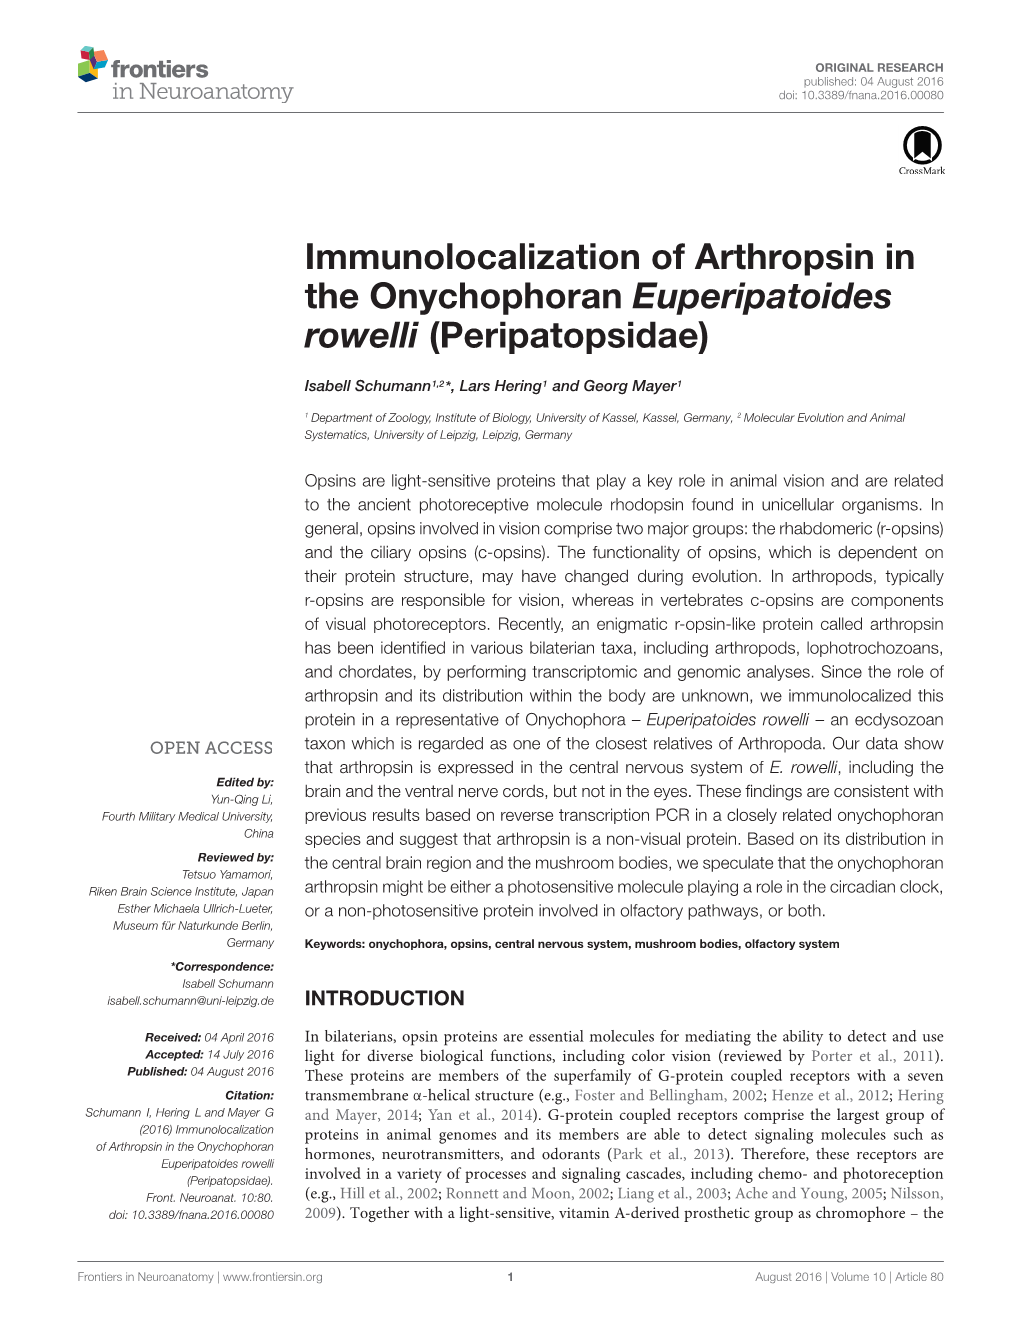 Immunolocalization of Arthropsin in the Onychophoran Euperipatoides Rowelli (Peripatopsidae)